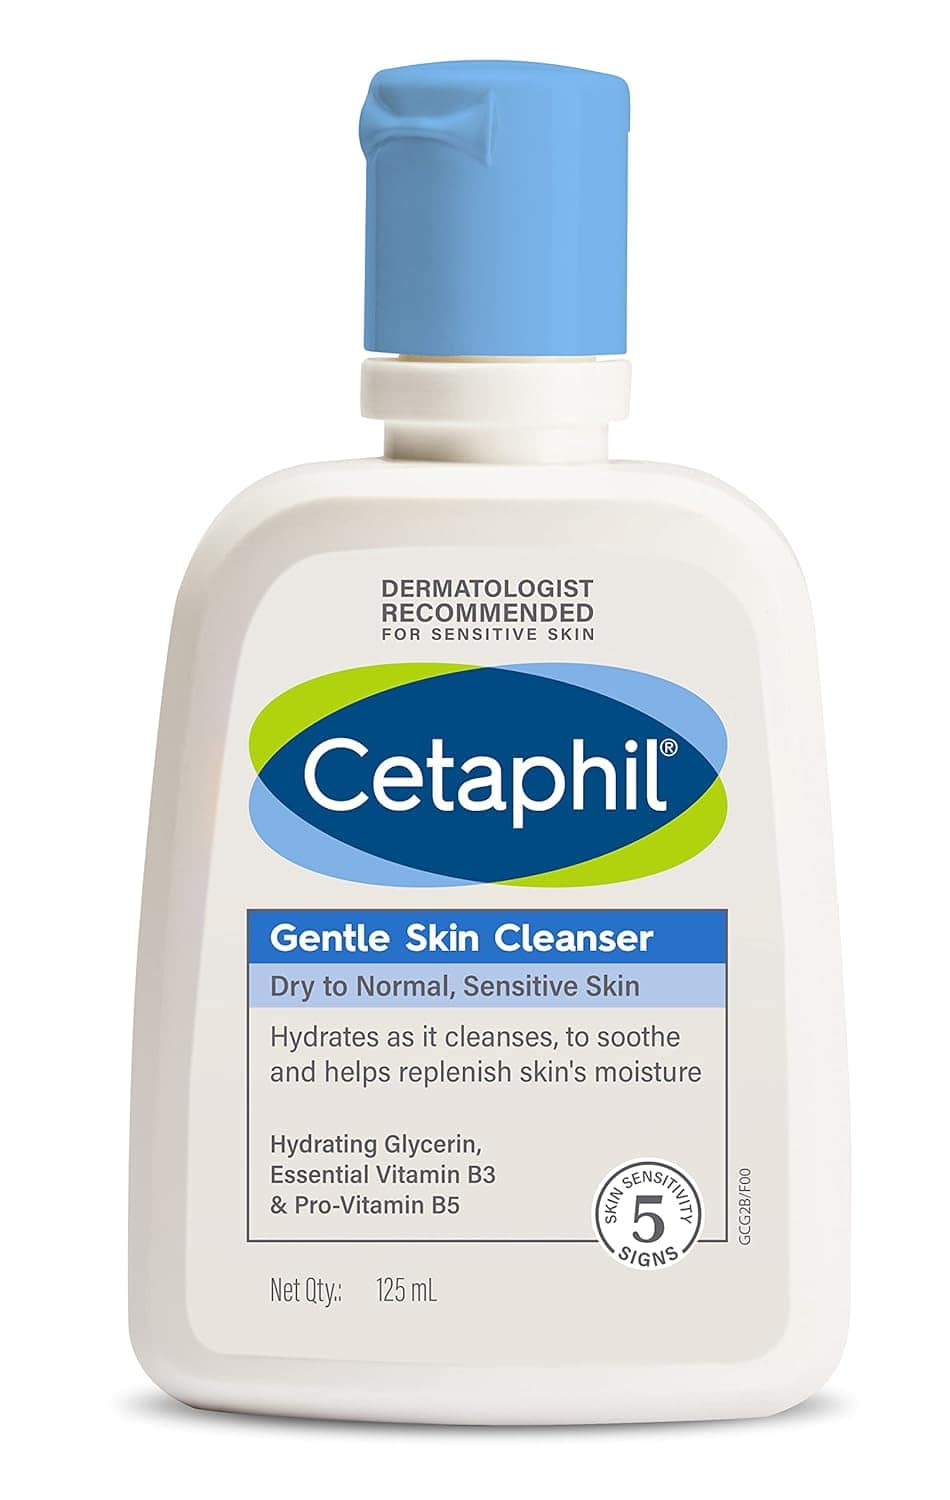 Cetaphil Face Wash Gentle Skin Cleanser